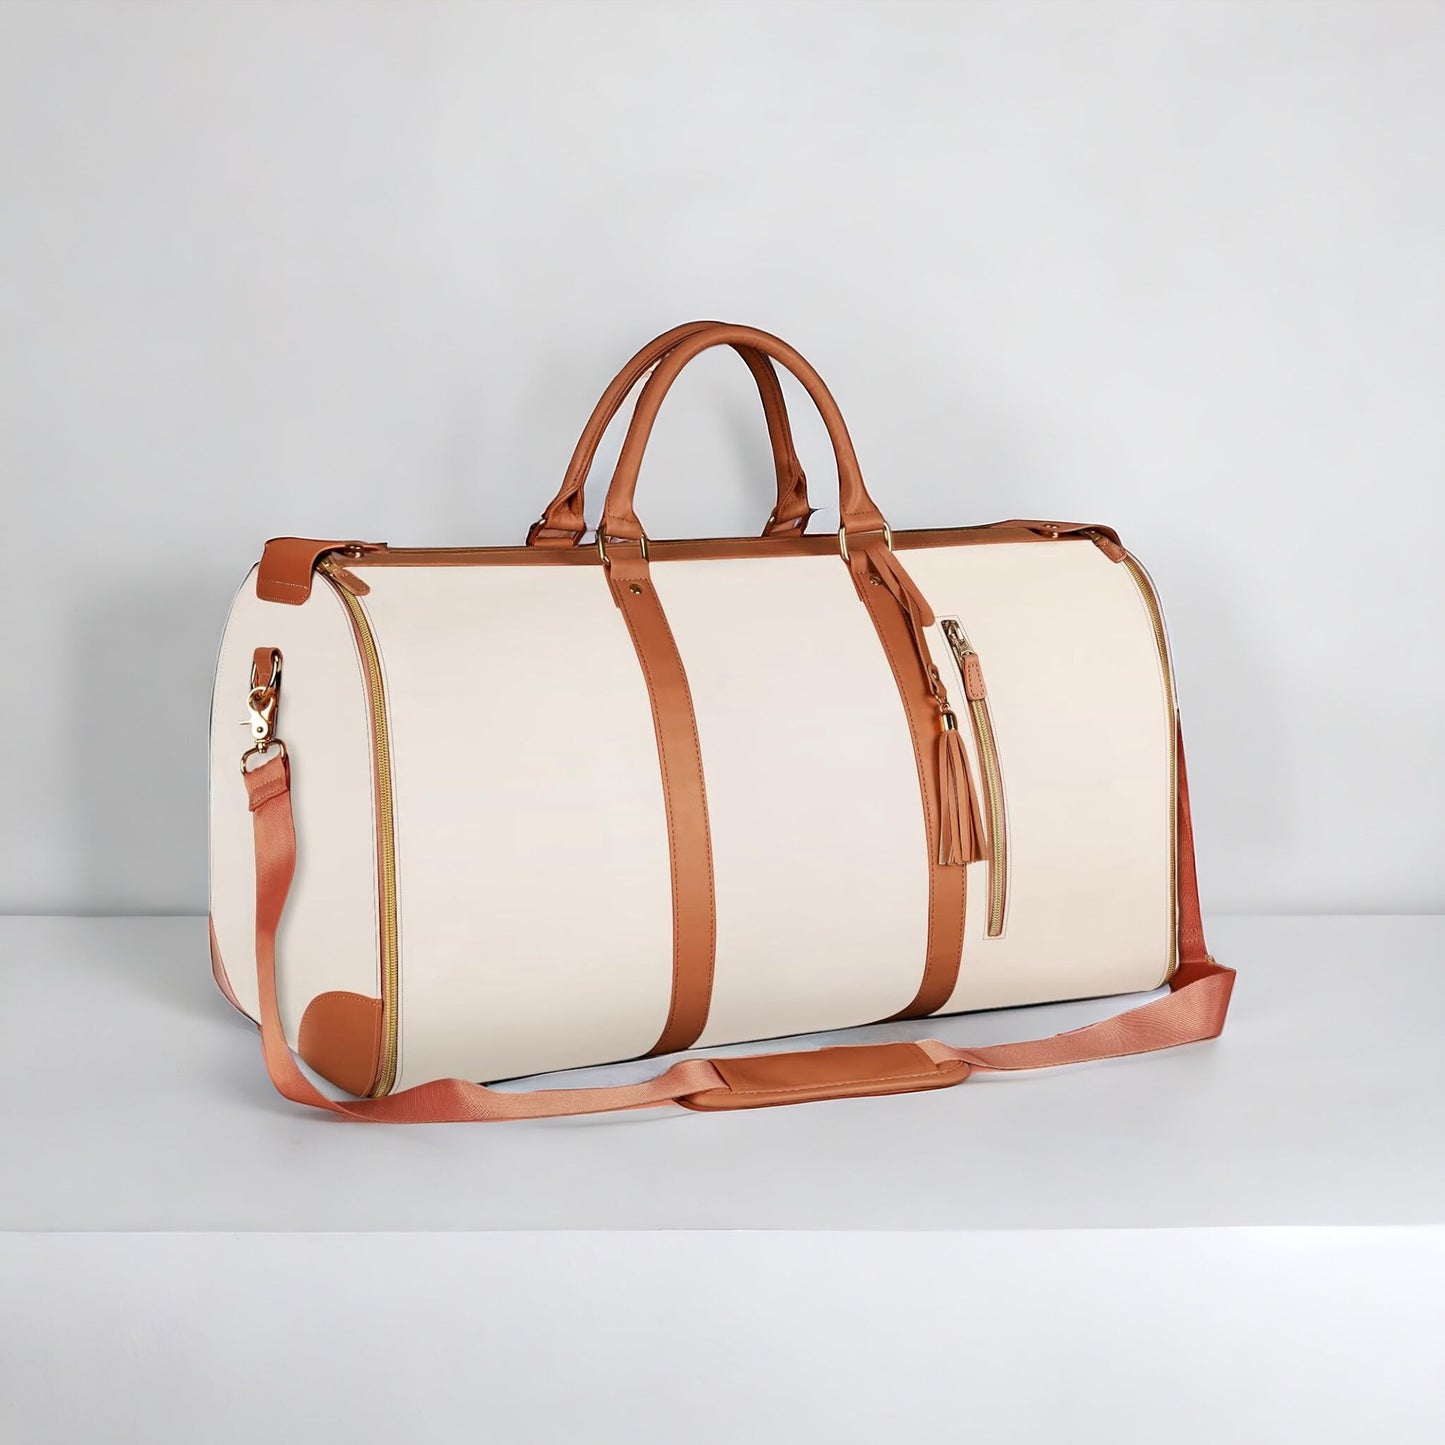 Flexi Travel Foldable Bag